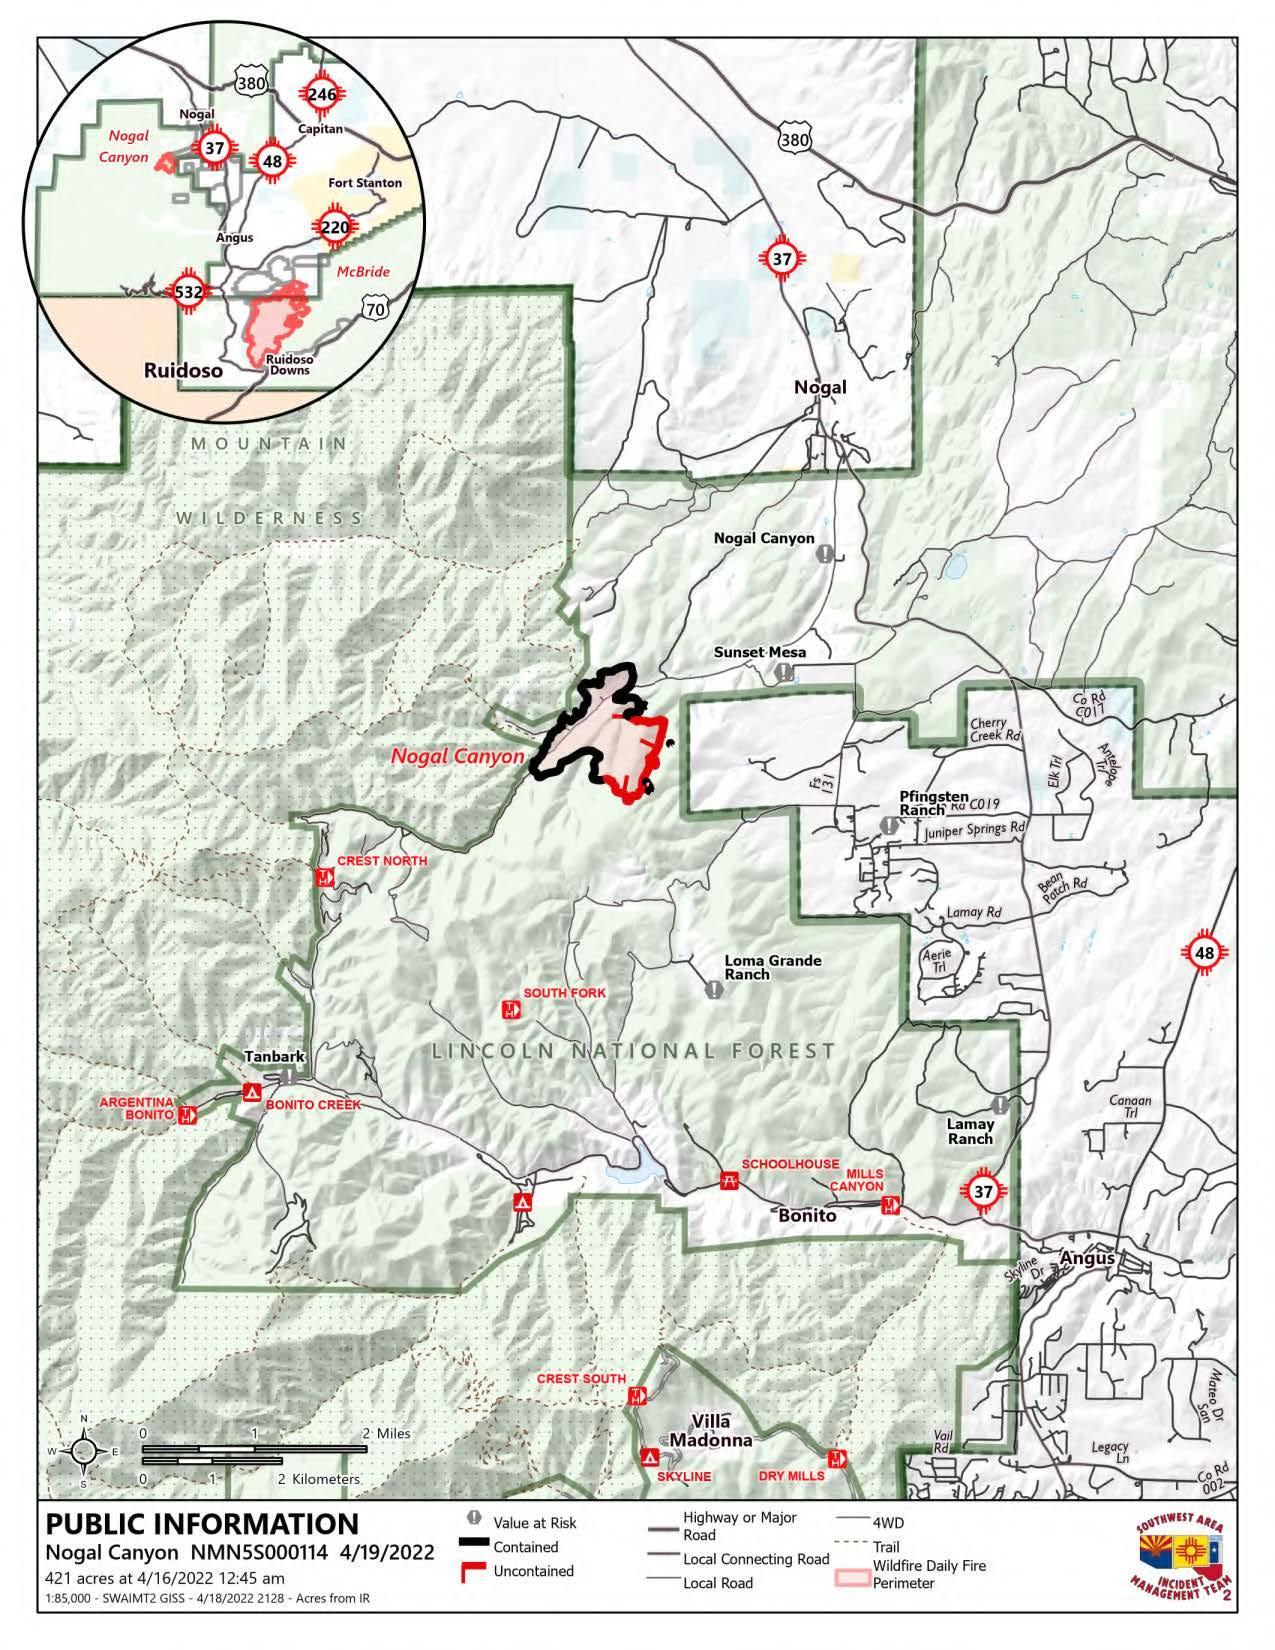 Nogal Canyon Fire Map April 19, 2022